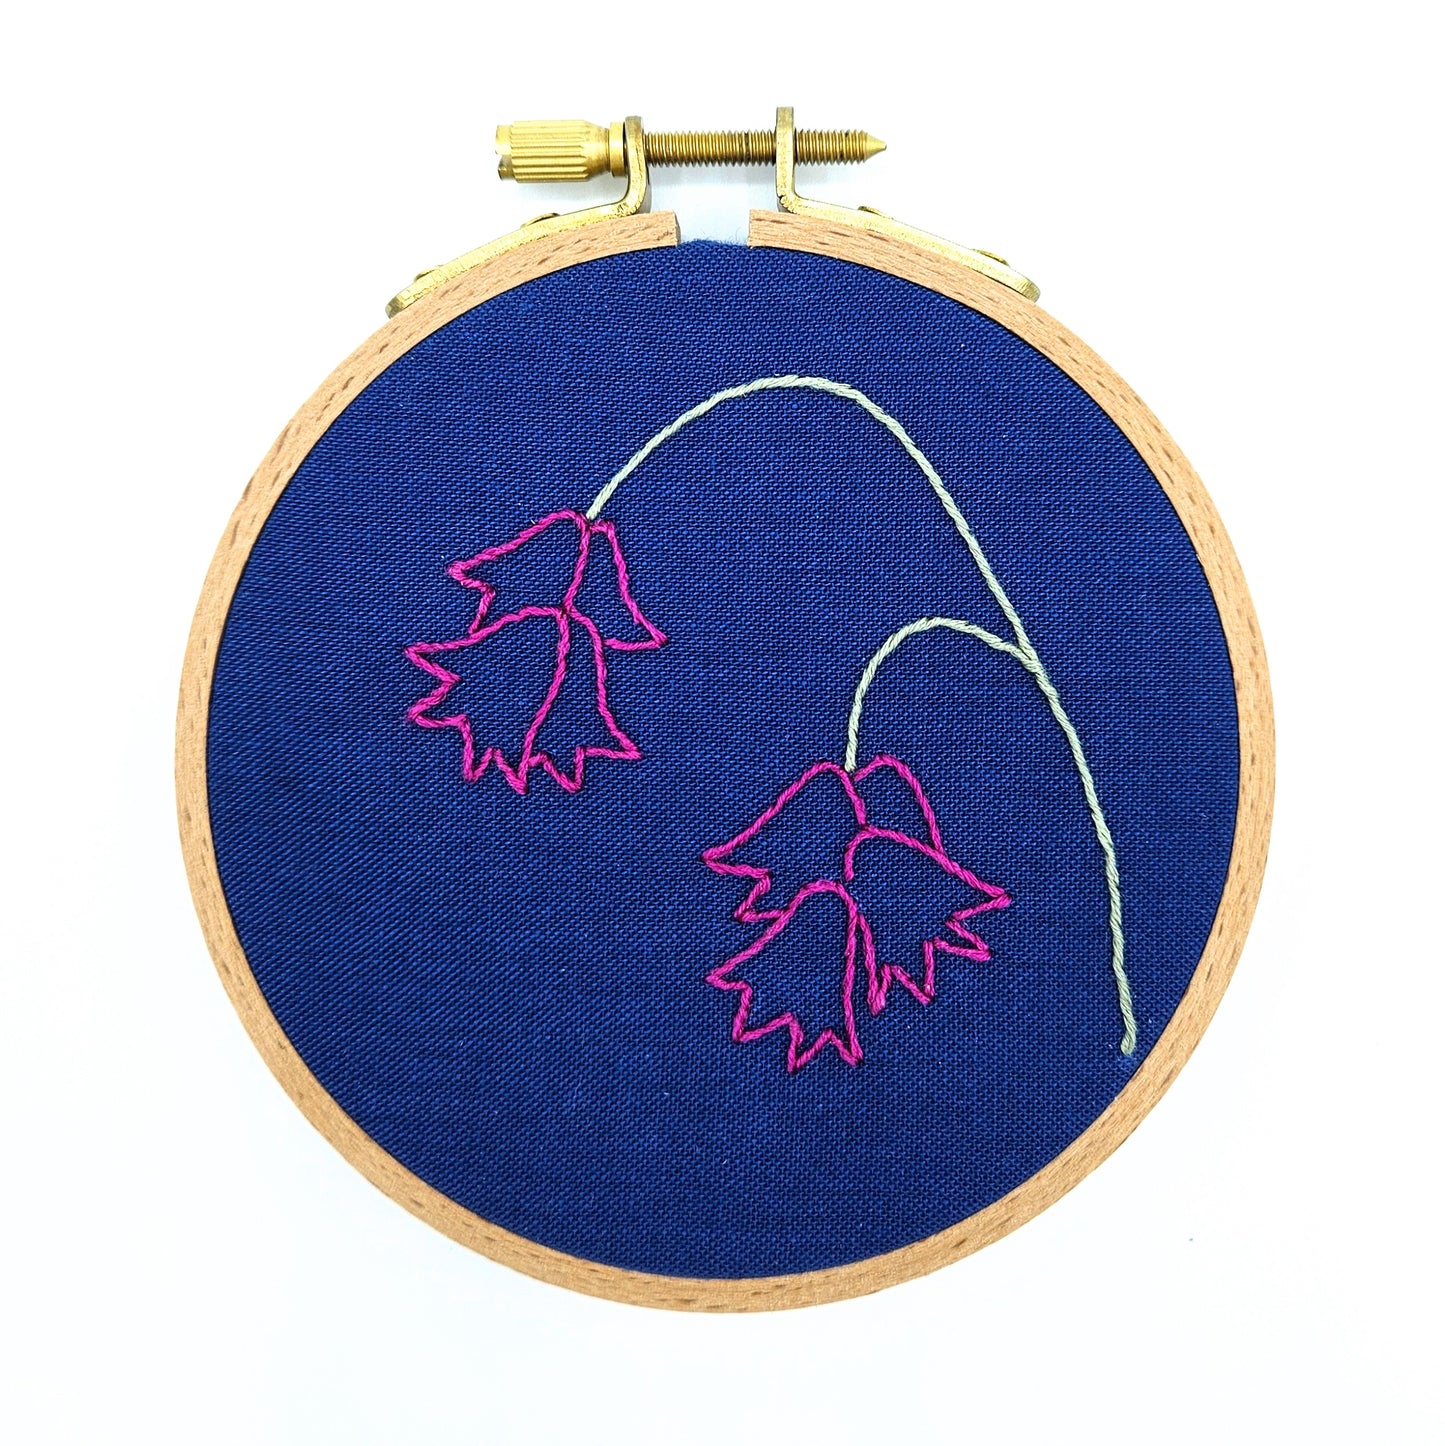 Angel's Fishing Rod Flower Embroidery Hoop Art